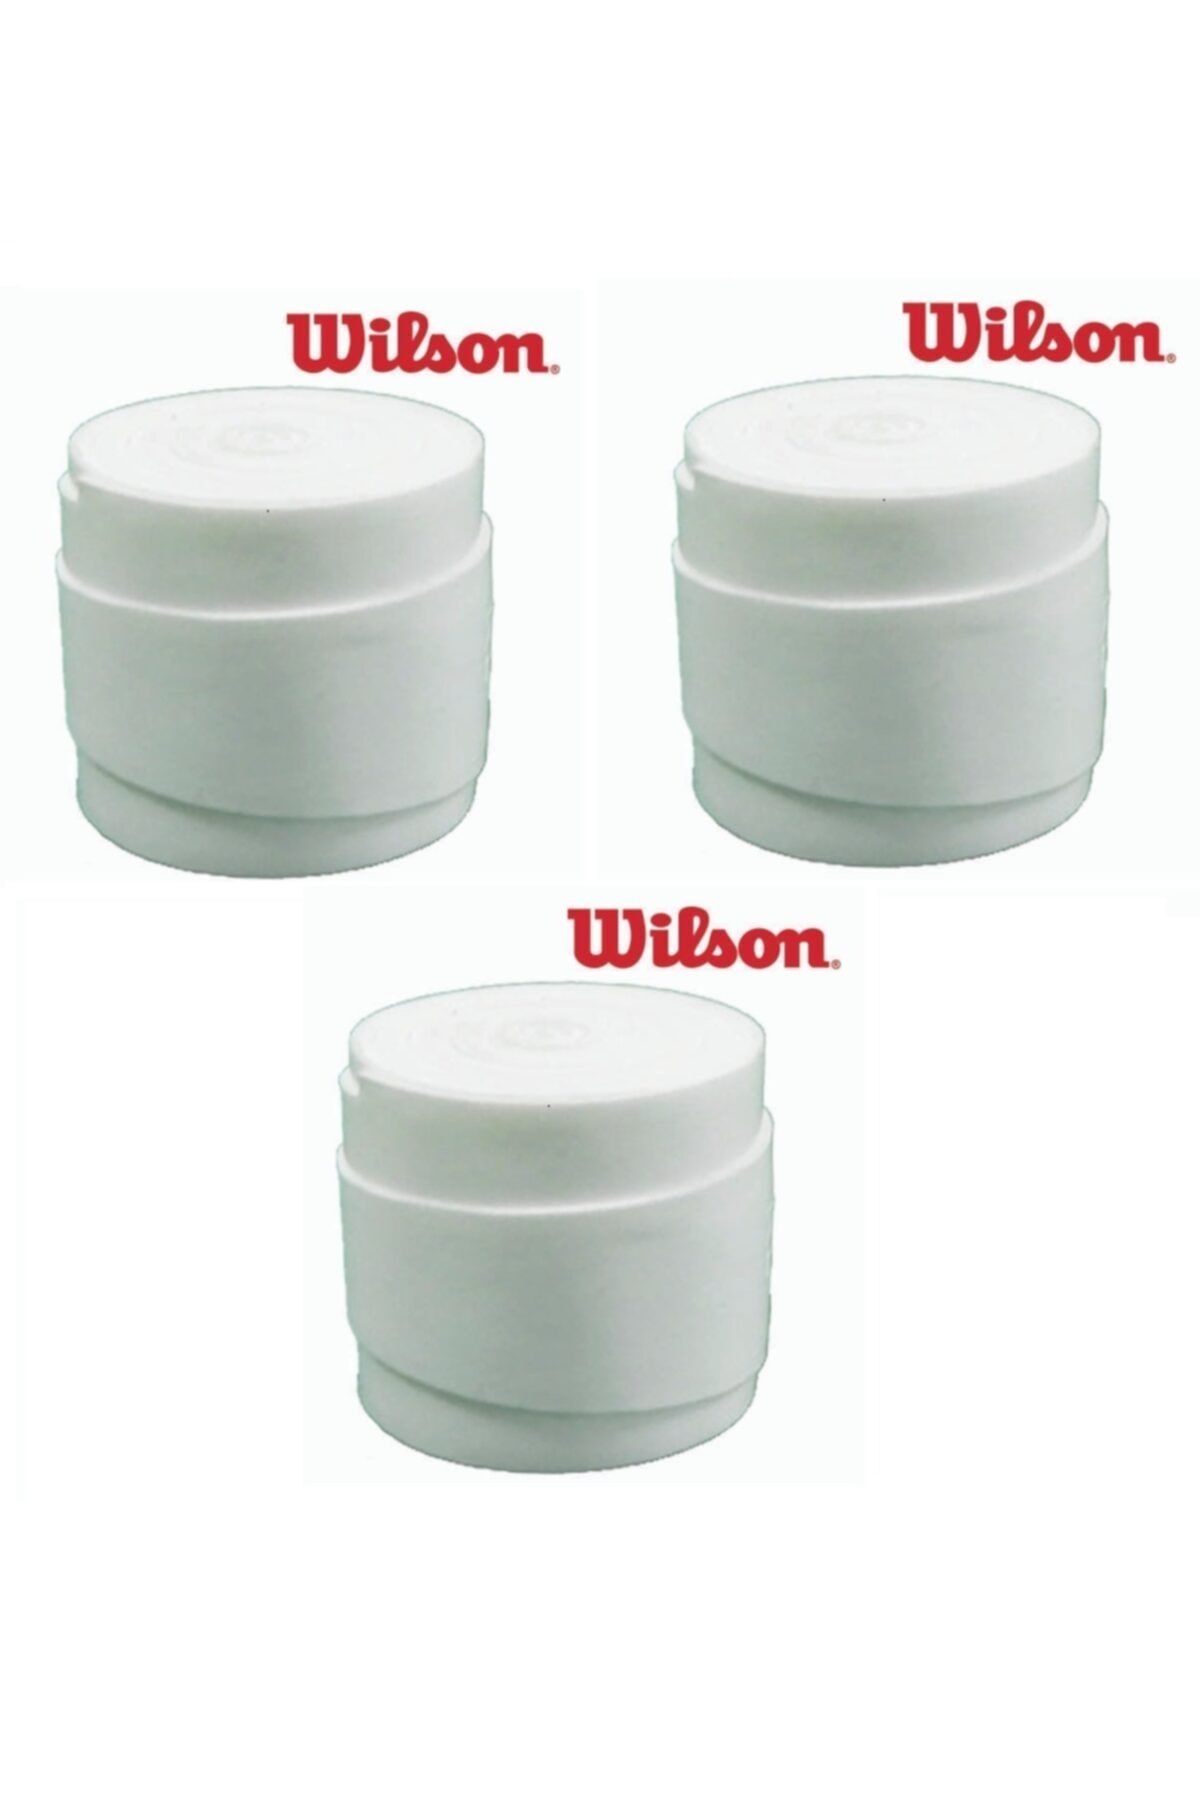 Wilson Pro Overgrips (3 pieces)